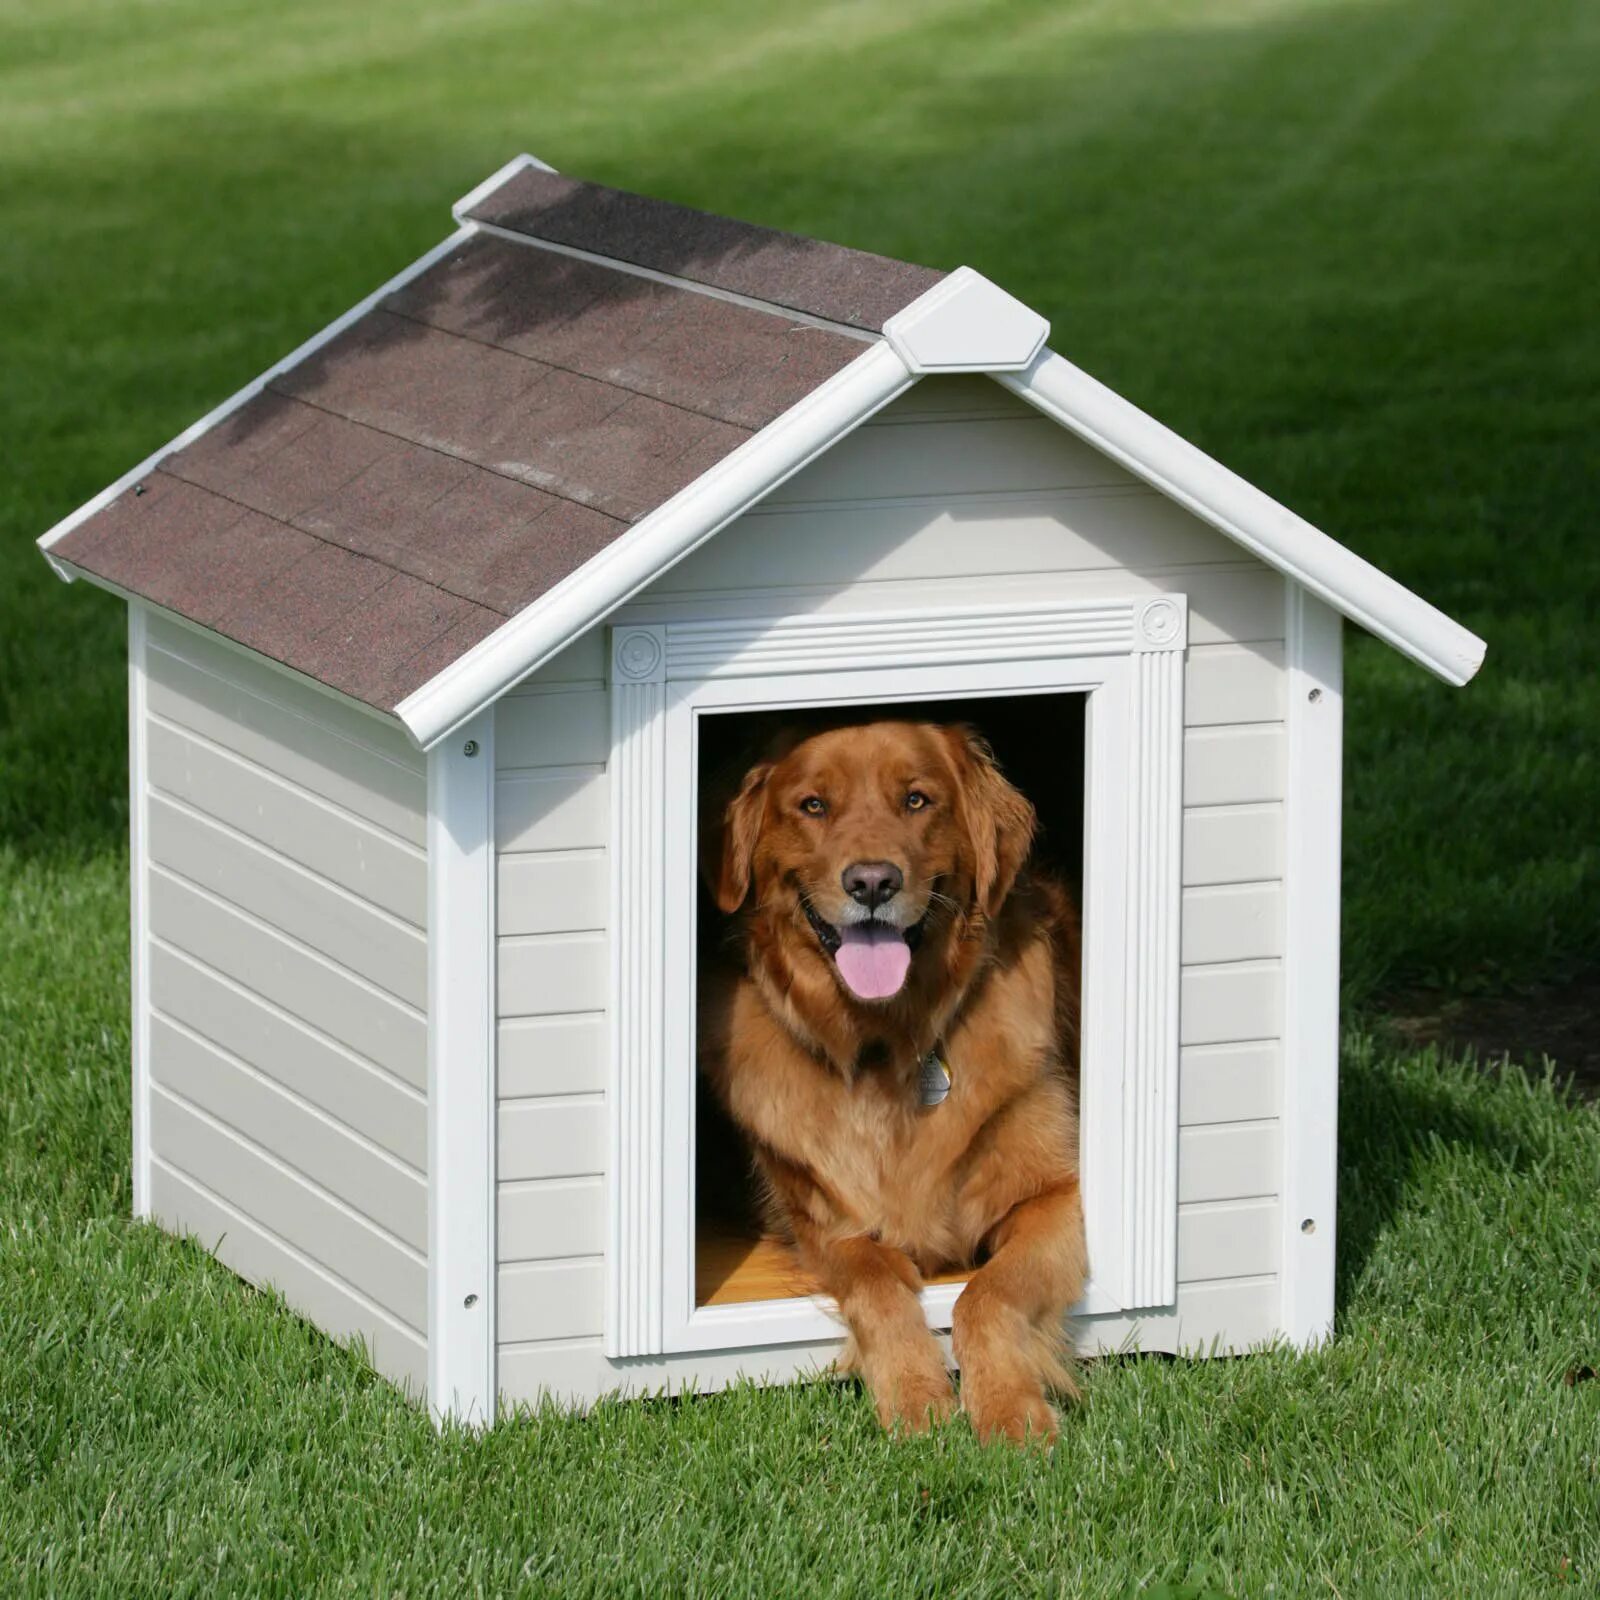 Dog house dog or alive demo. Собака с конурой. Собачья будка. Б̶у̶т̶к̶а̶ д̶л̶я̶ с̶о̶б̶а̶к̶. Красивые будки для собак.